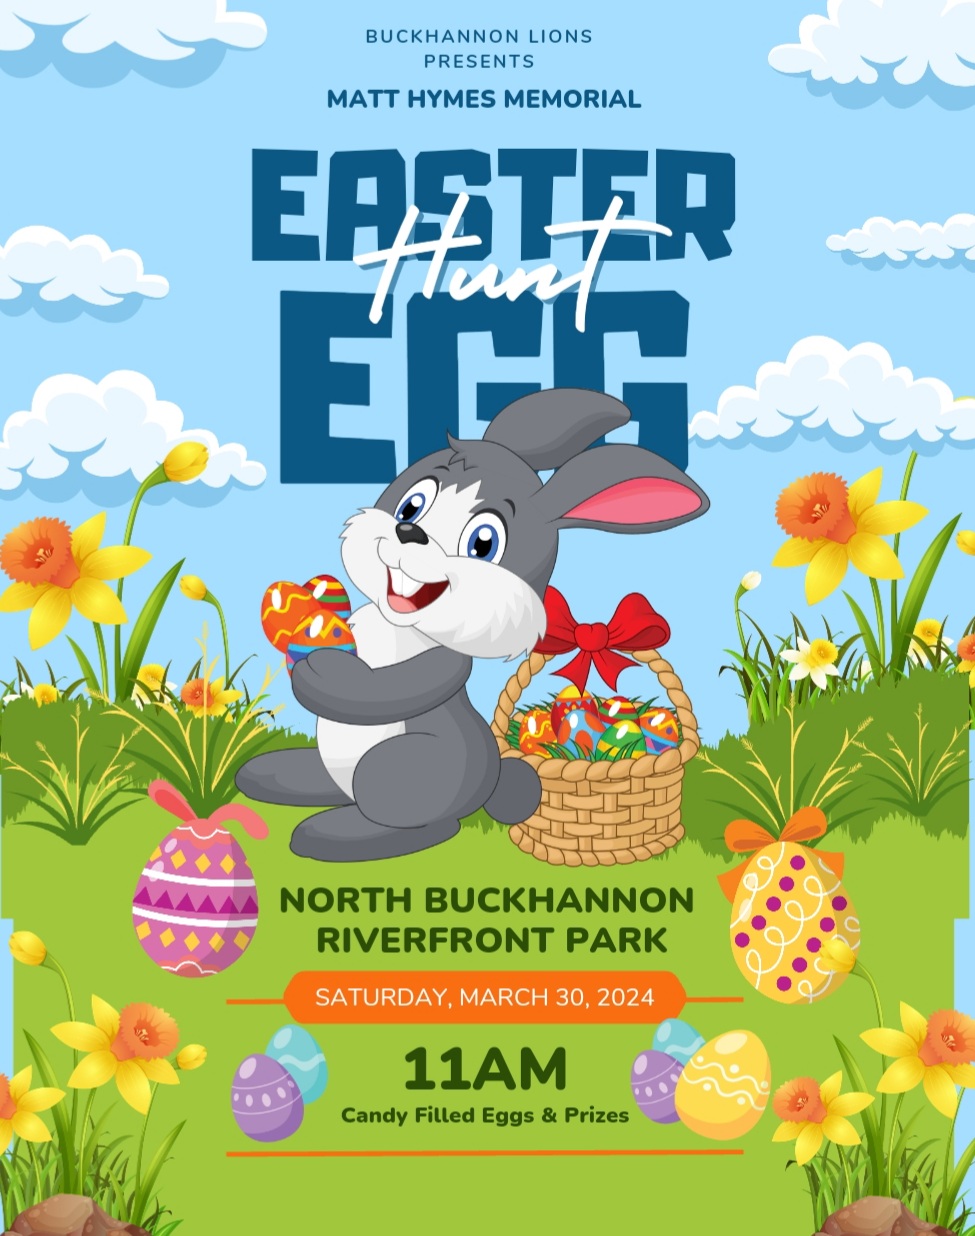 BLC - Matt Hymes Memorial Easter Egg Hunt